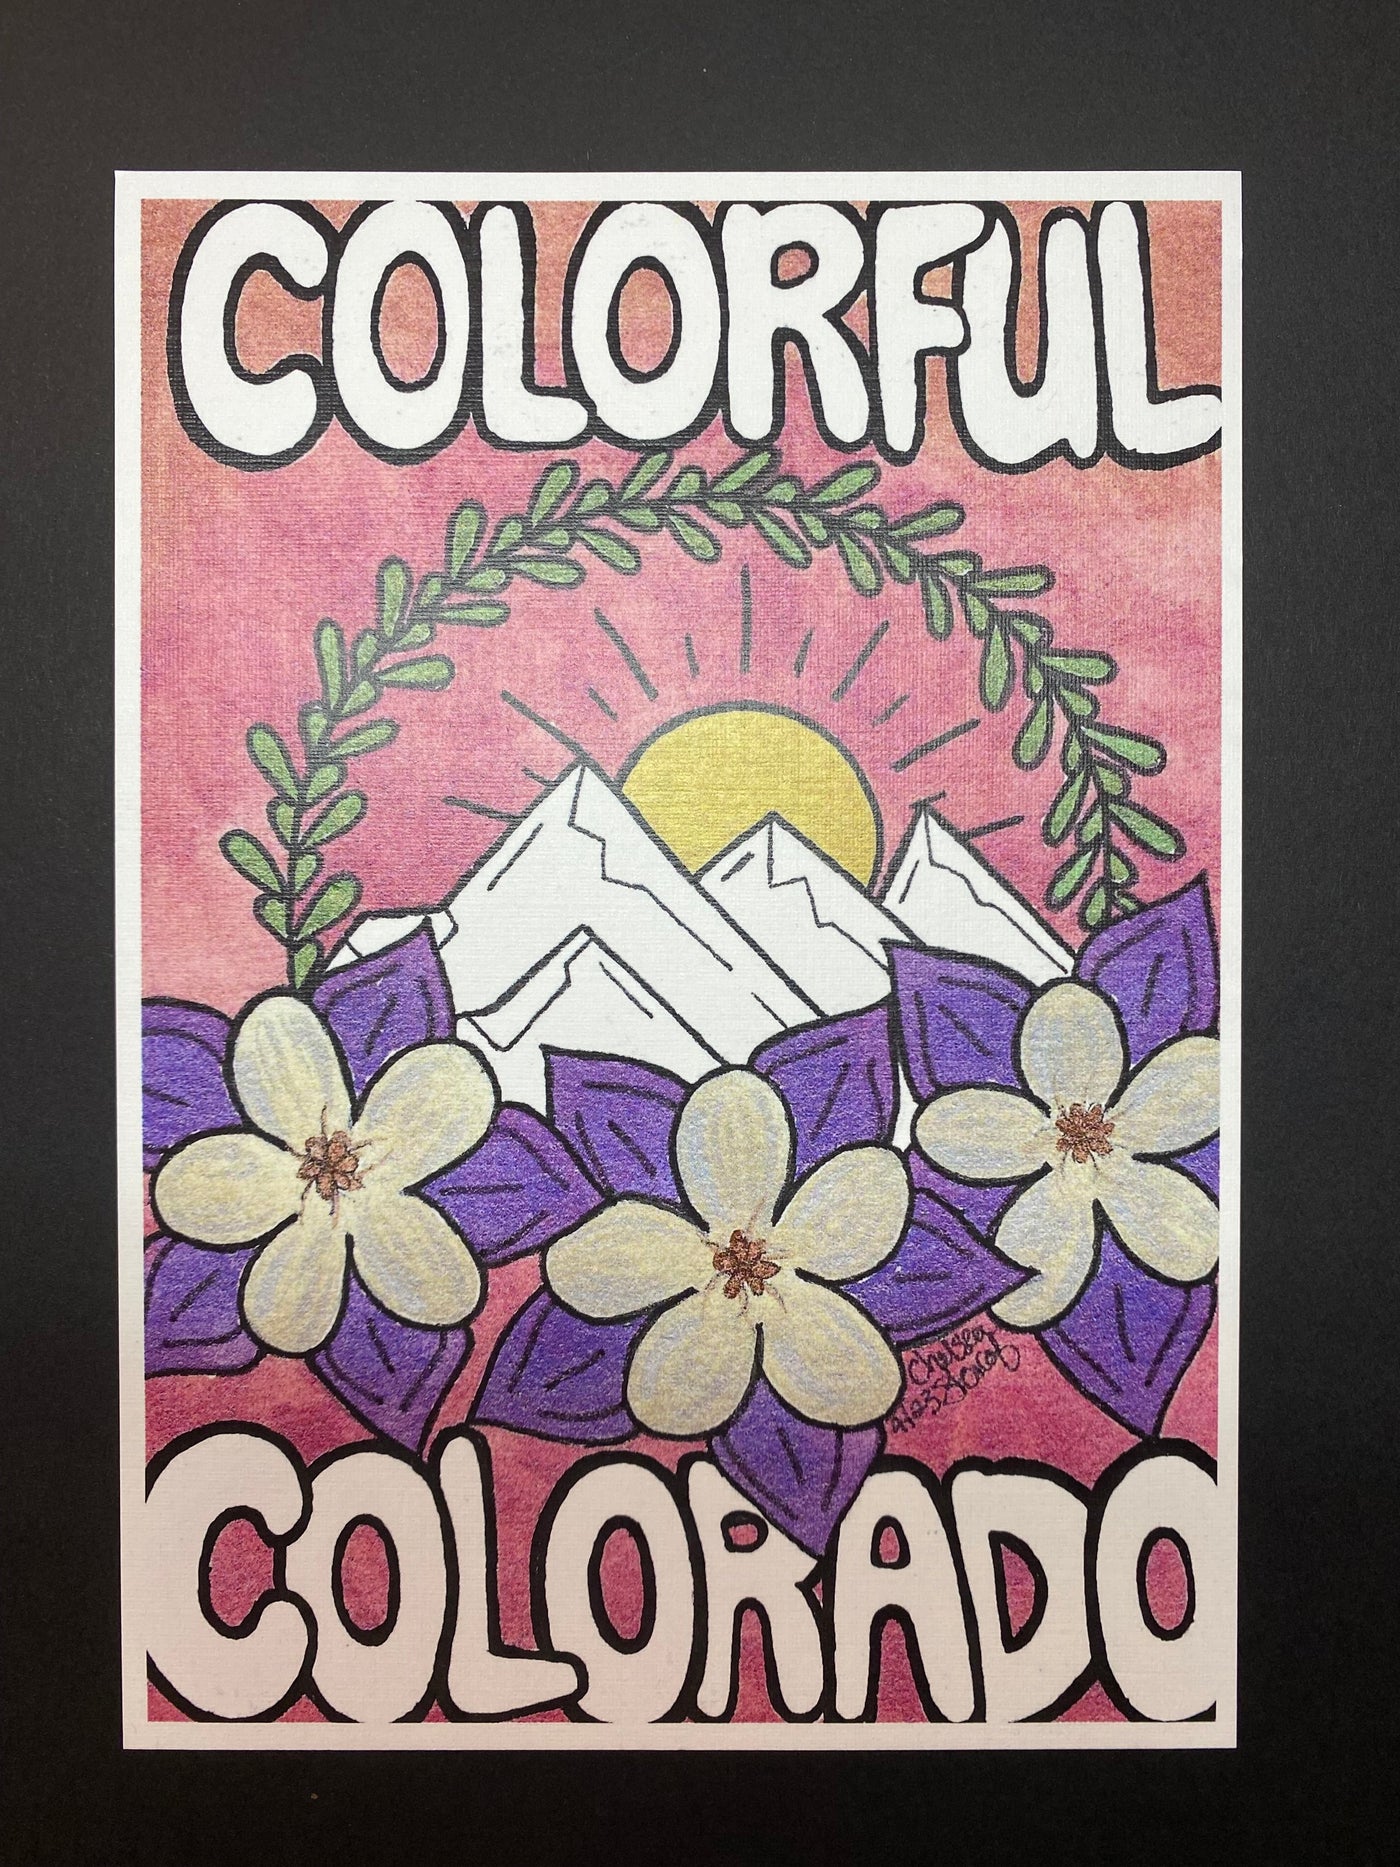 Colorful Colorado Watercolor Print - Artisan Made